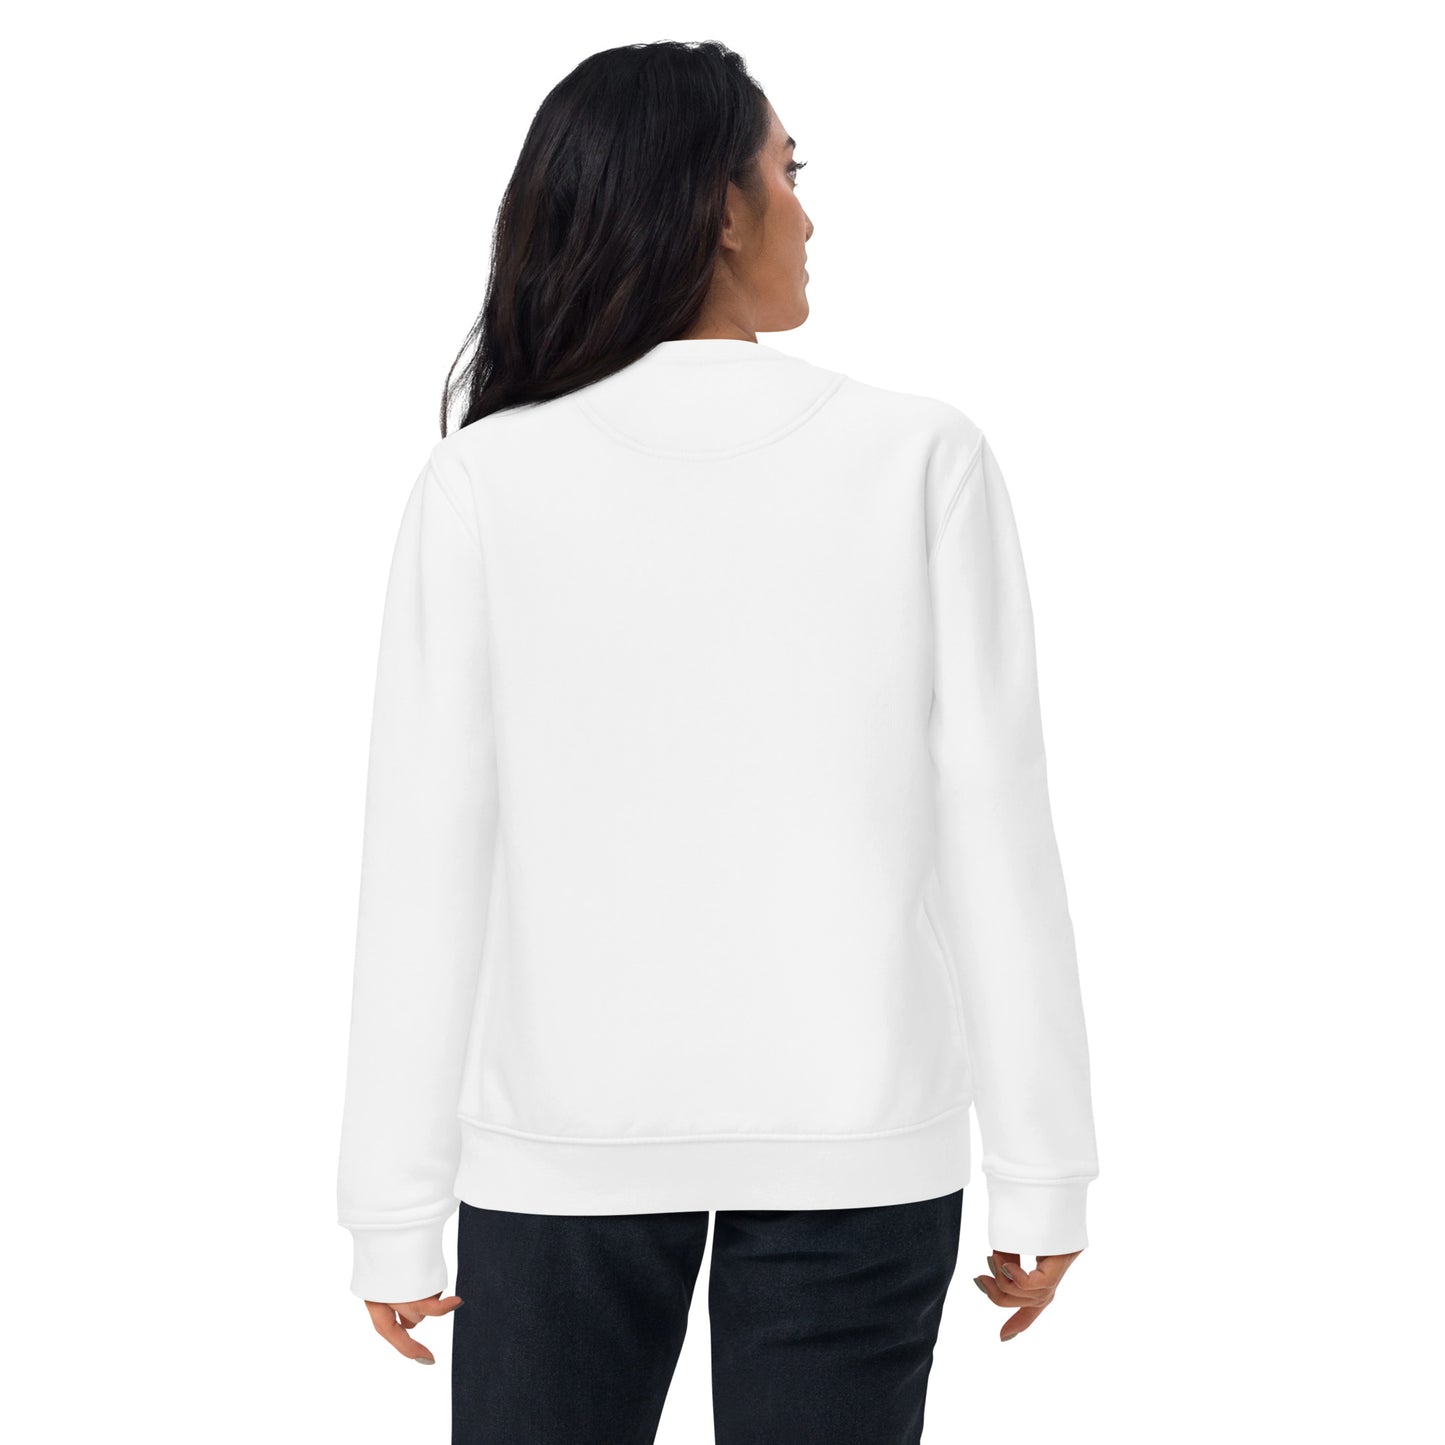 Unconditional Love Women's Oversized Organic Cotton Sweatshirt